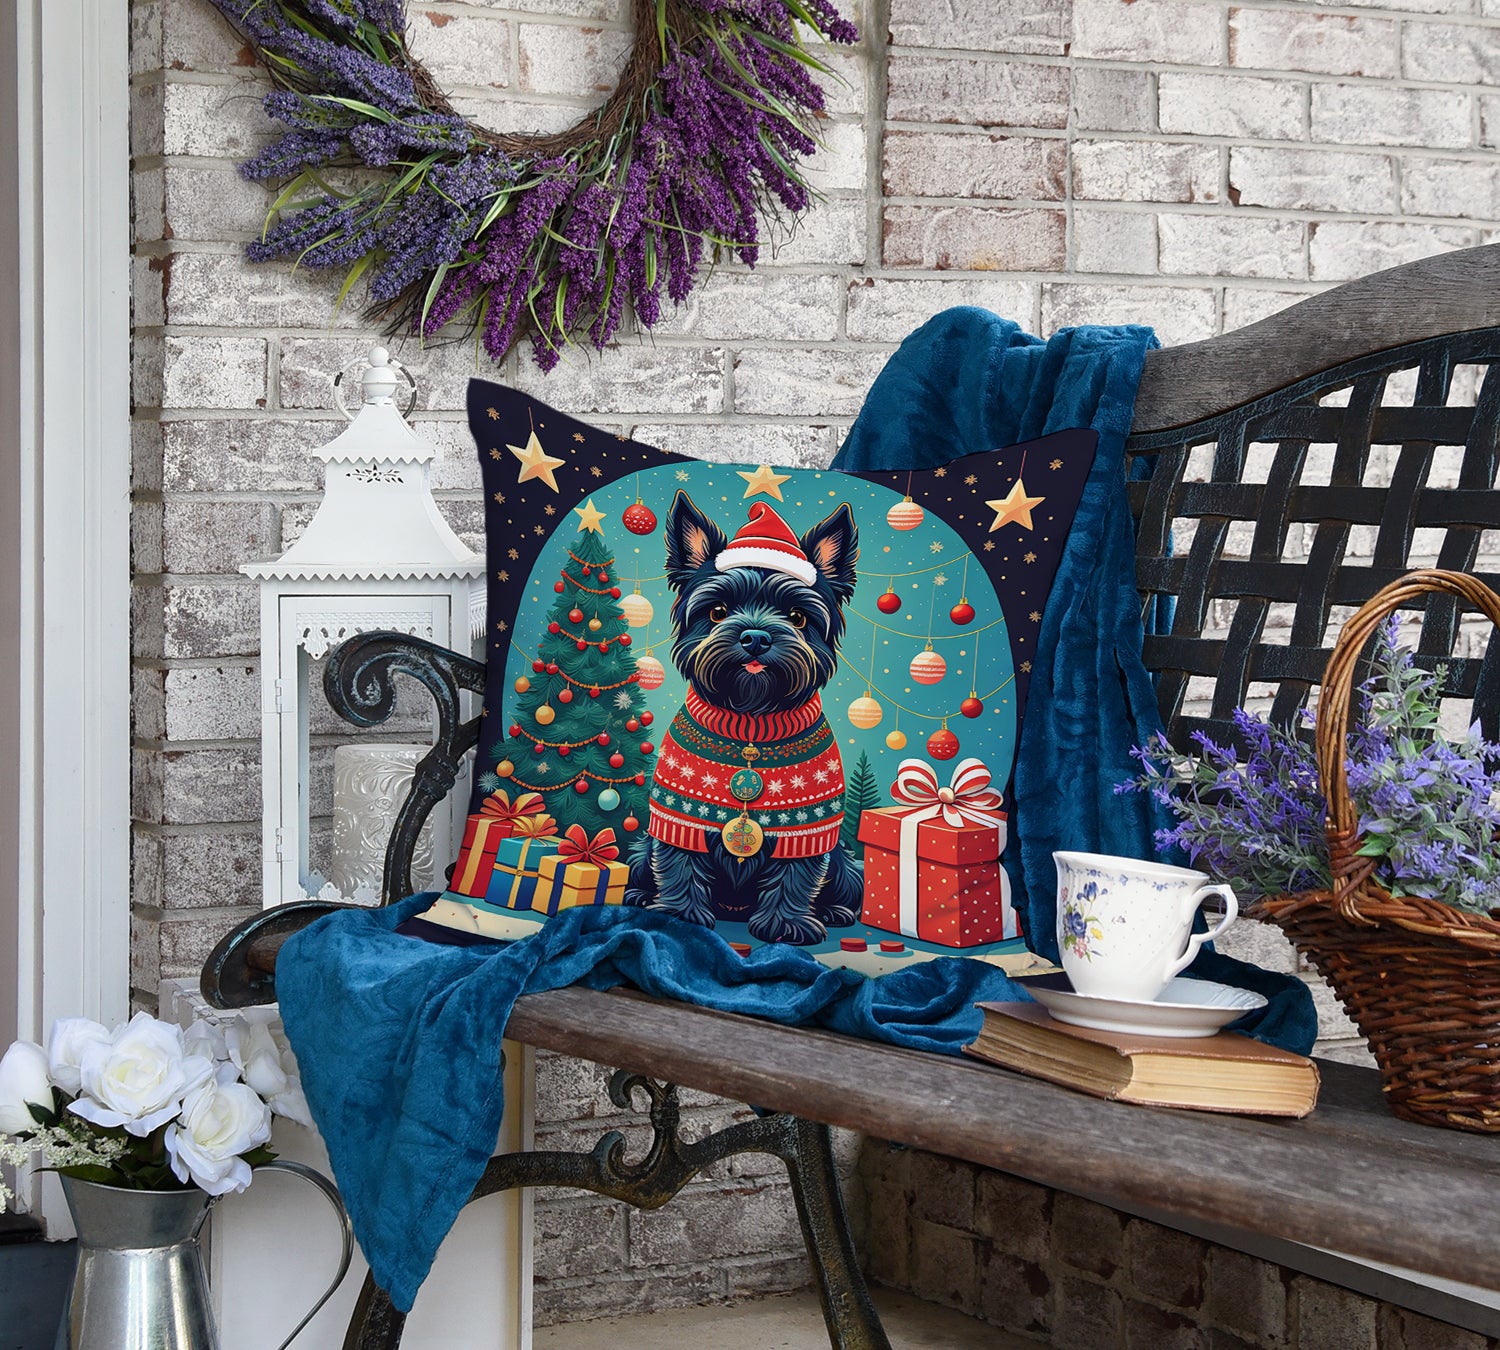 Scottish Terrier Christmas Fabric Decorative Pillow